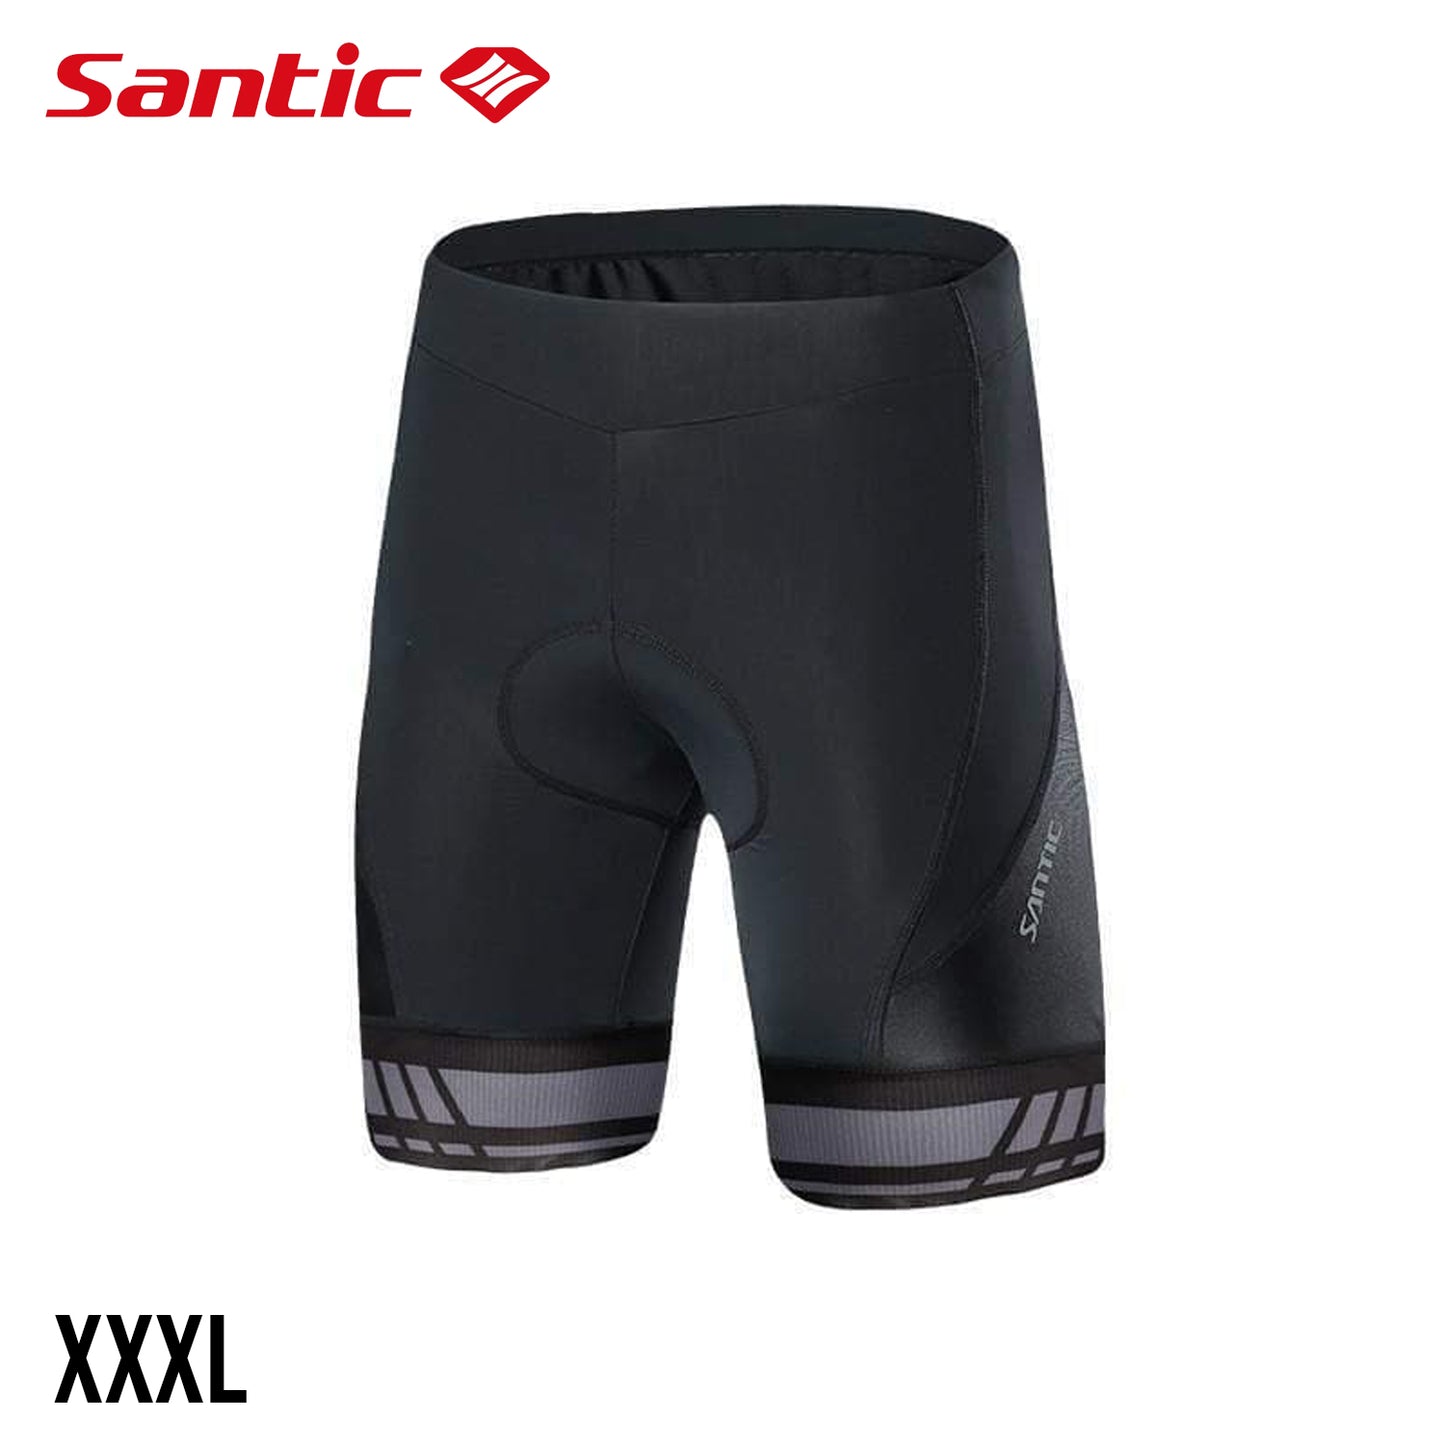 Santic Cayenne Men's Spring Summer Cycling Shorts - Black